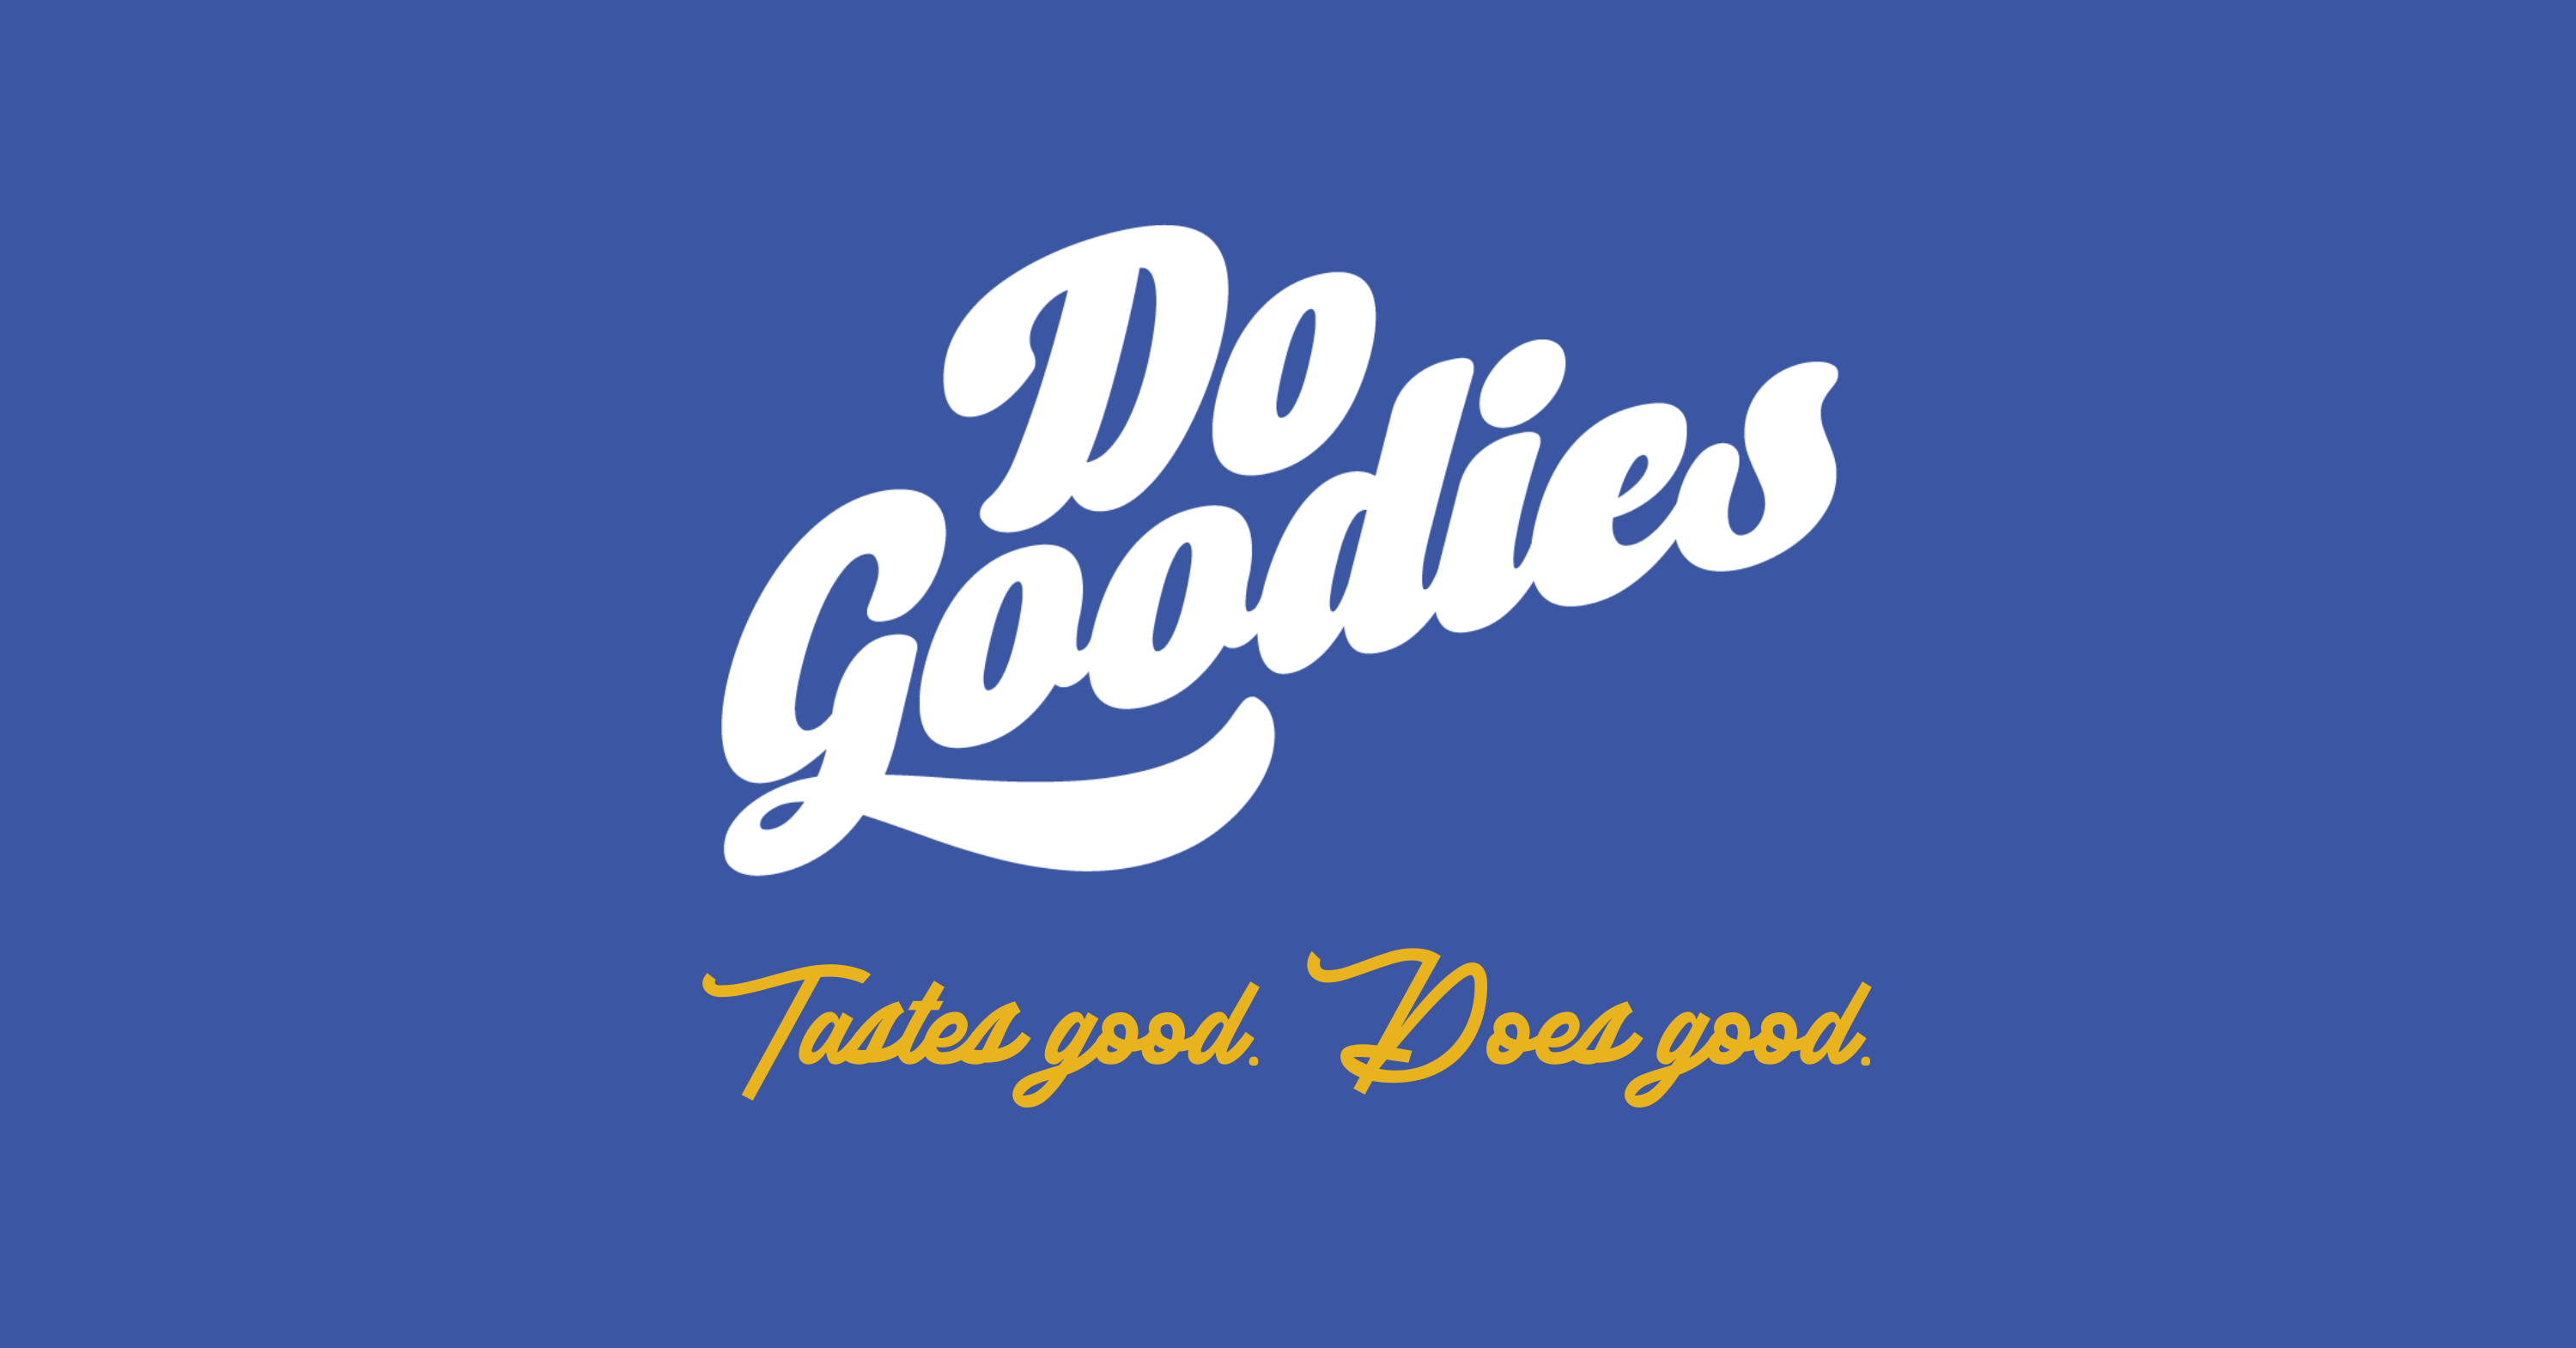 Do Goodies: Tastes Good. Does Good.